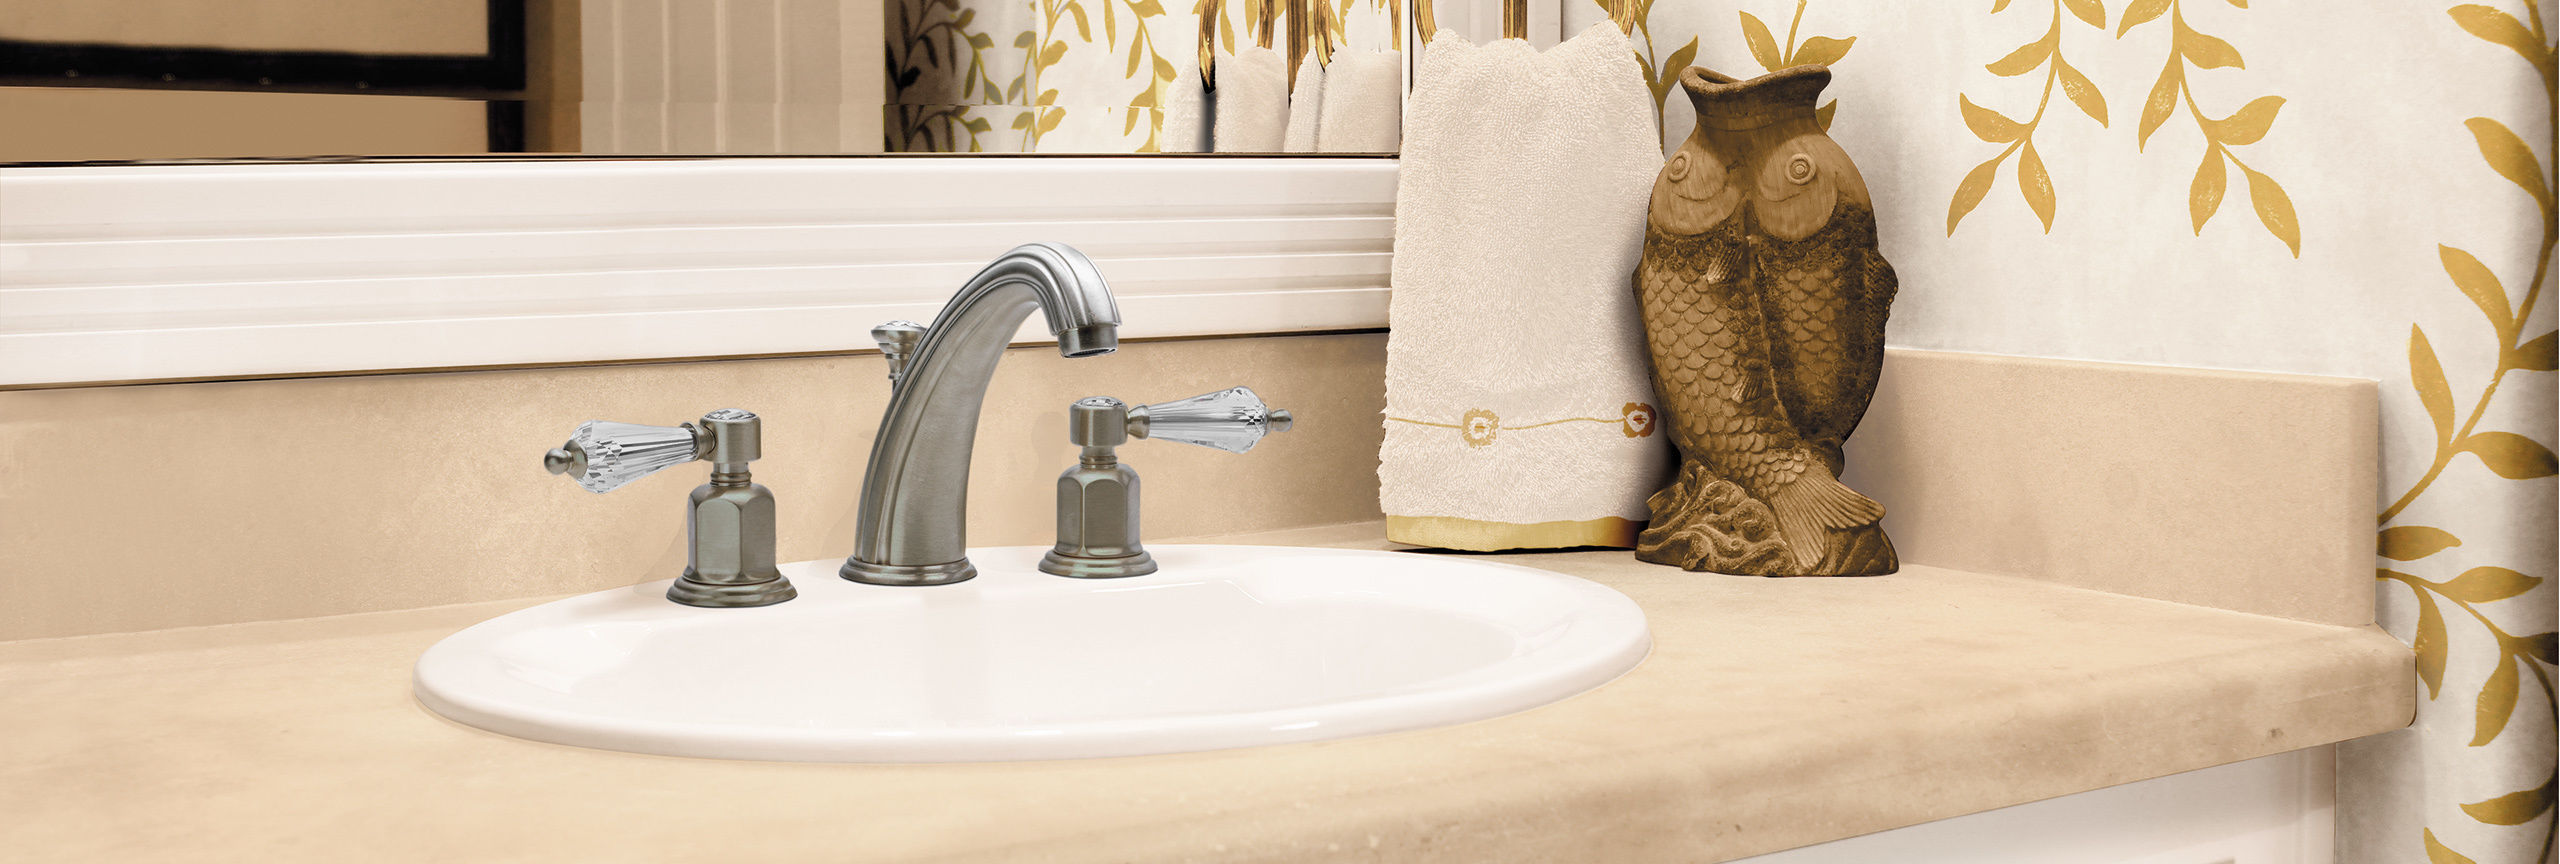 bathroom series: san clemente widespread faucet with crystal handles